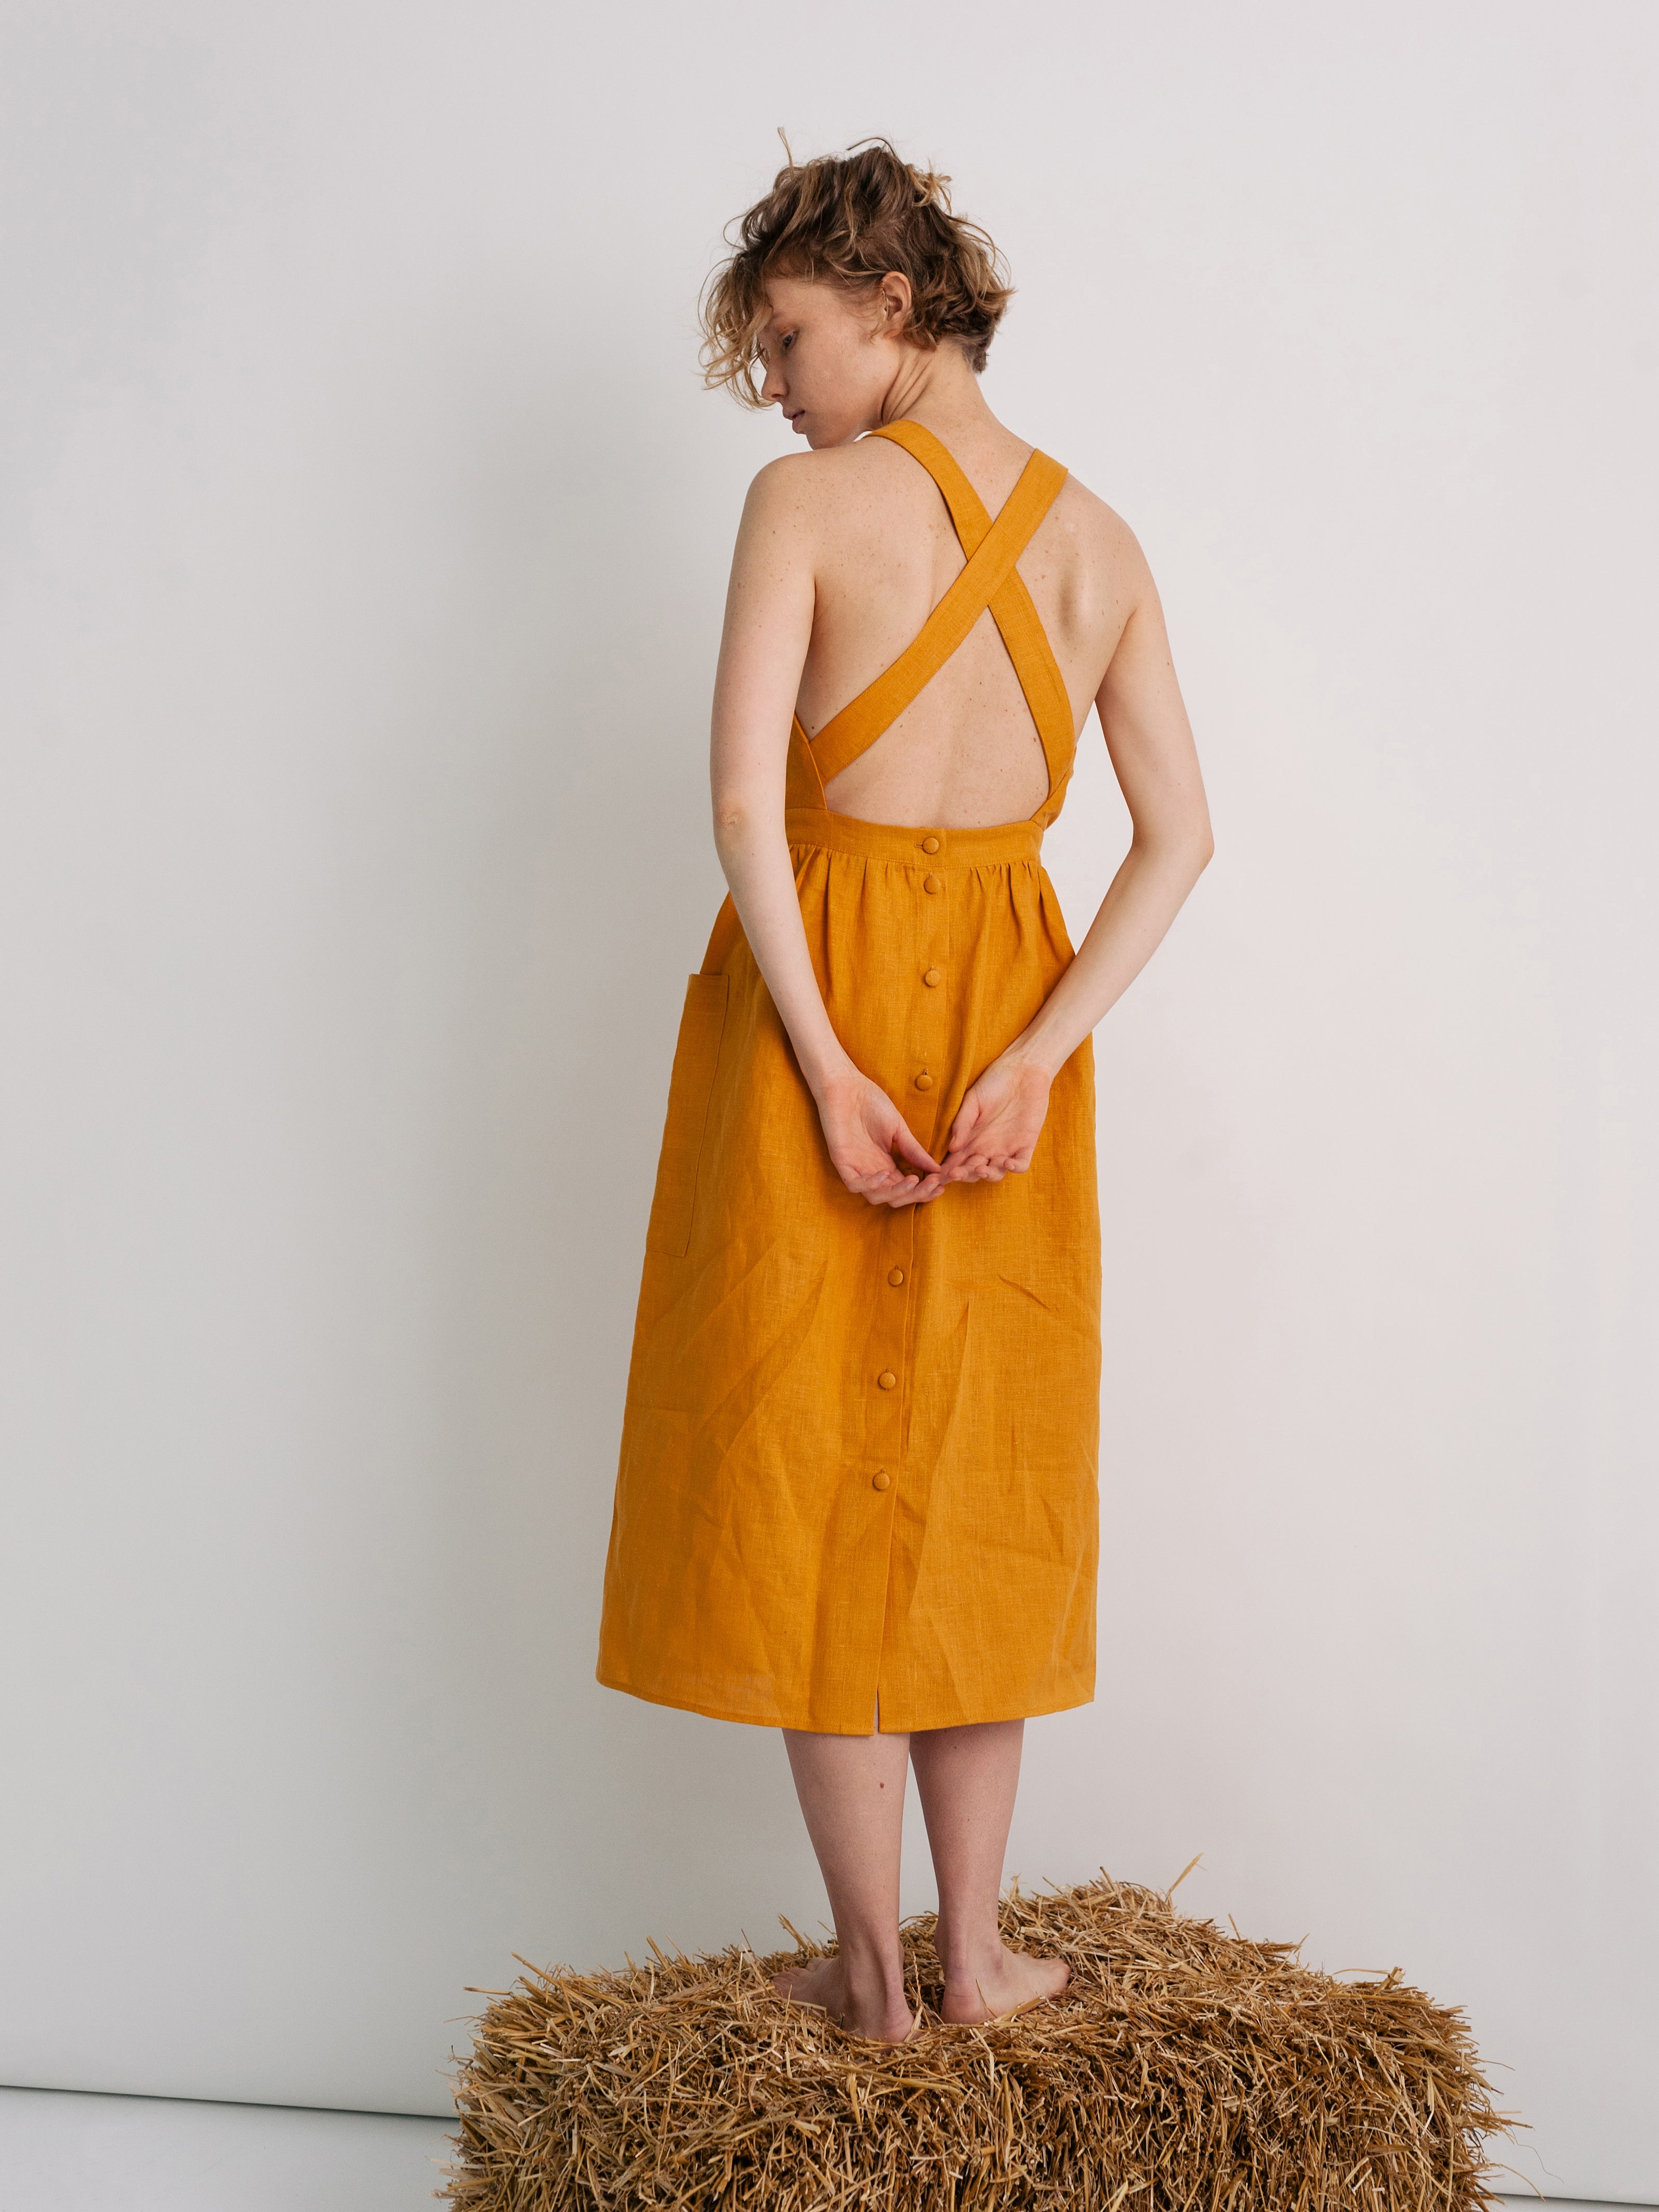 mustard pinafore dress